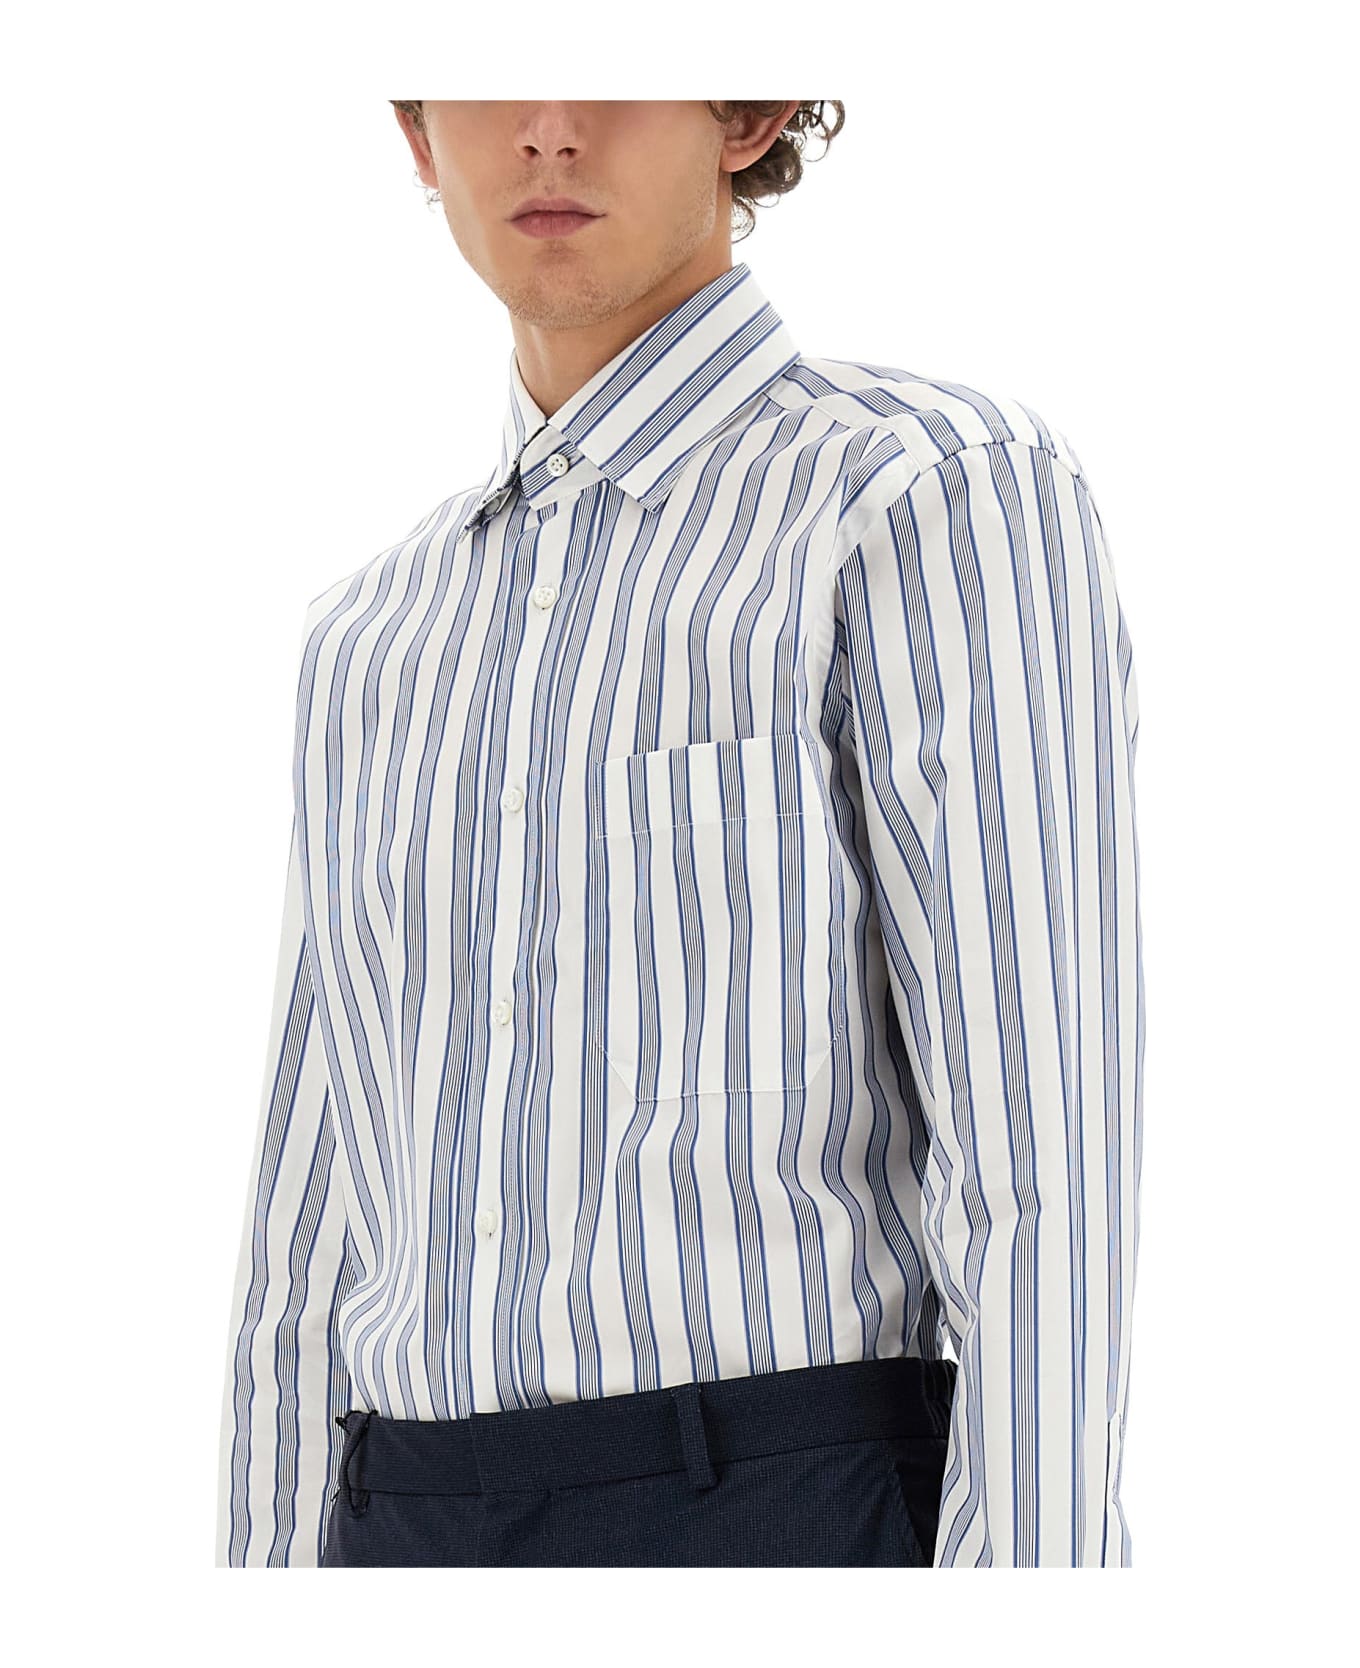 Hugo Boss Shirt With Stripe Pattern - BABY BLUE